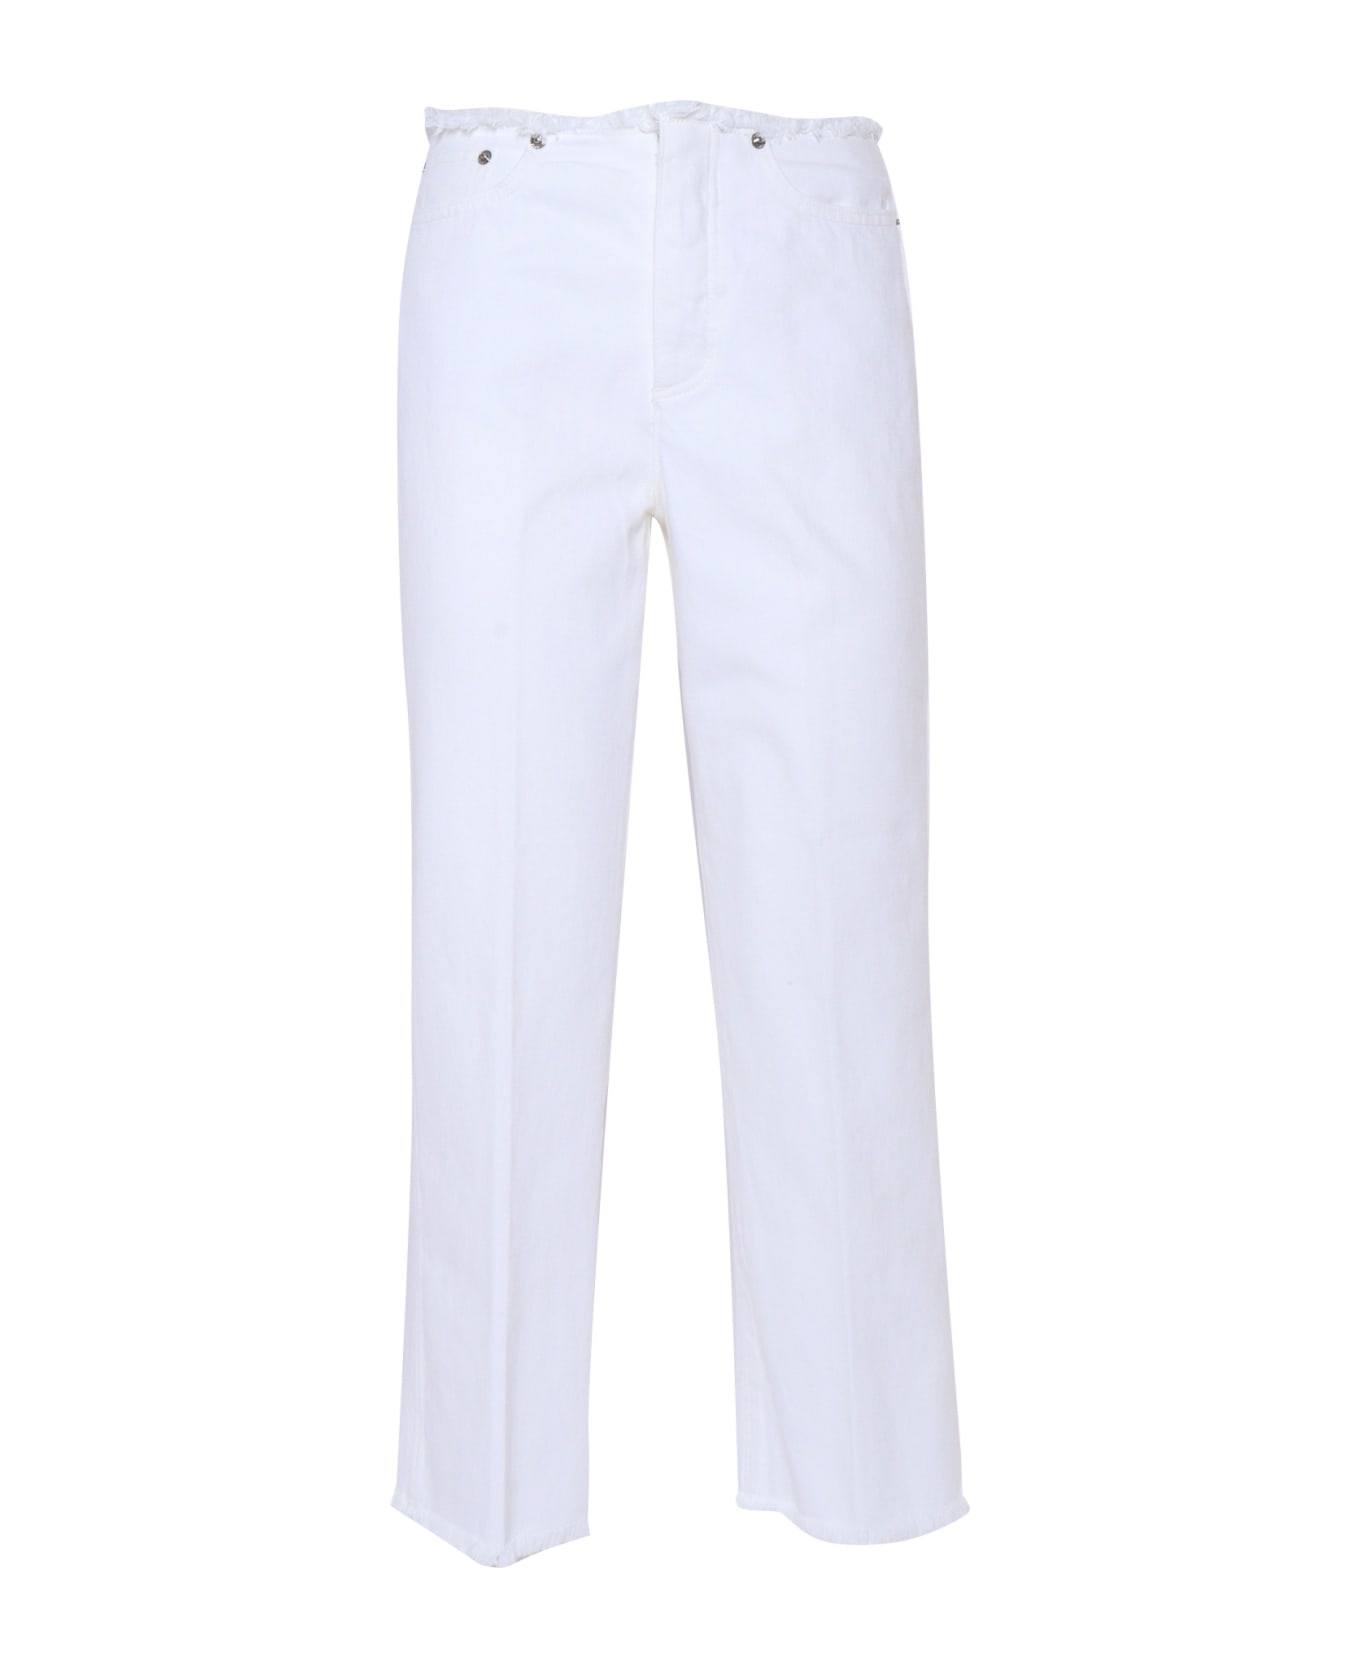 Michael Kors White Jeans - WHITE